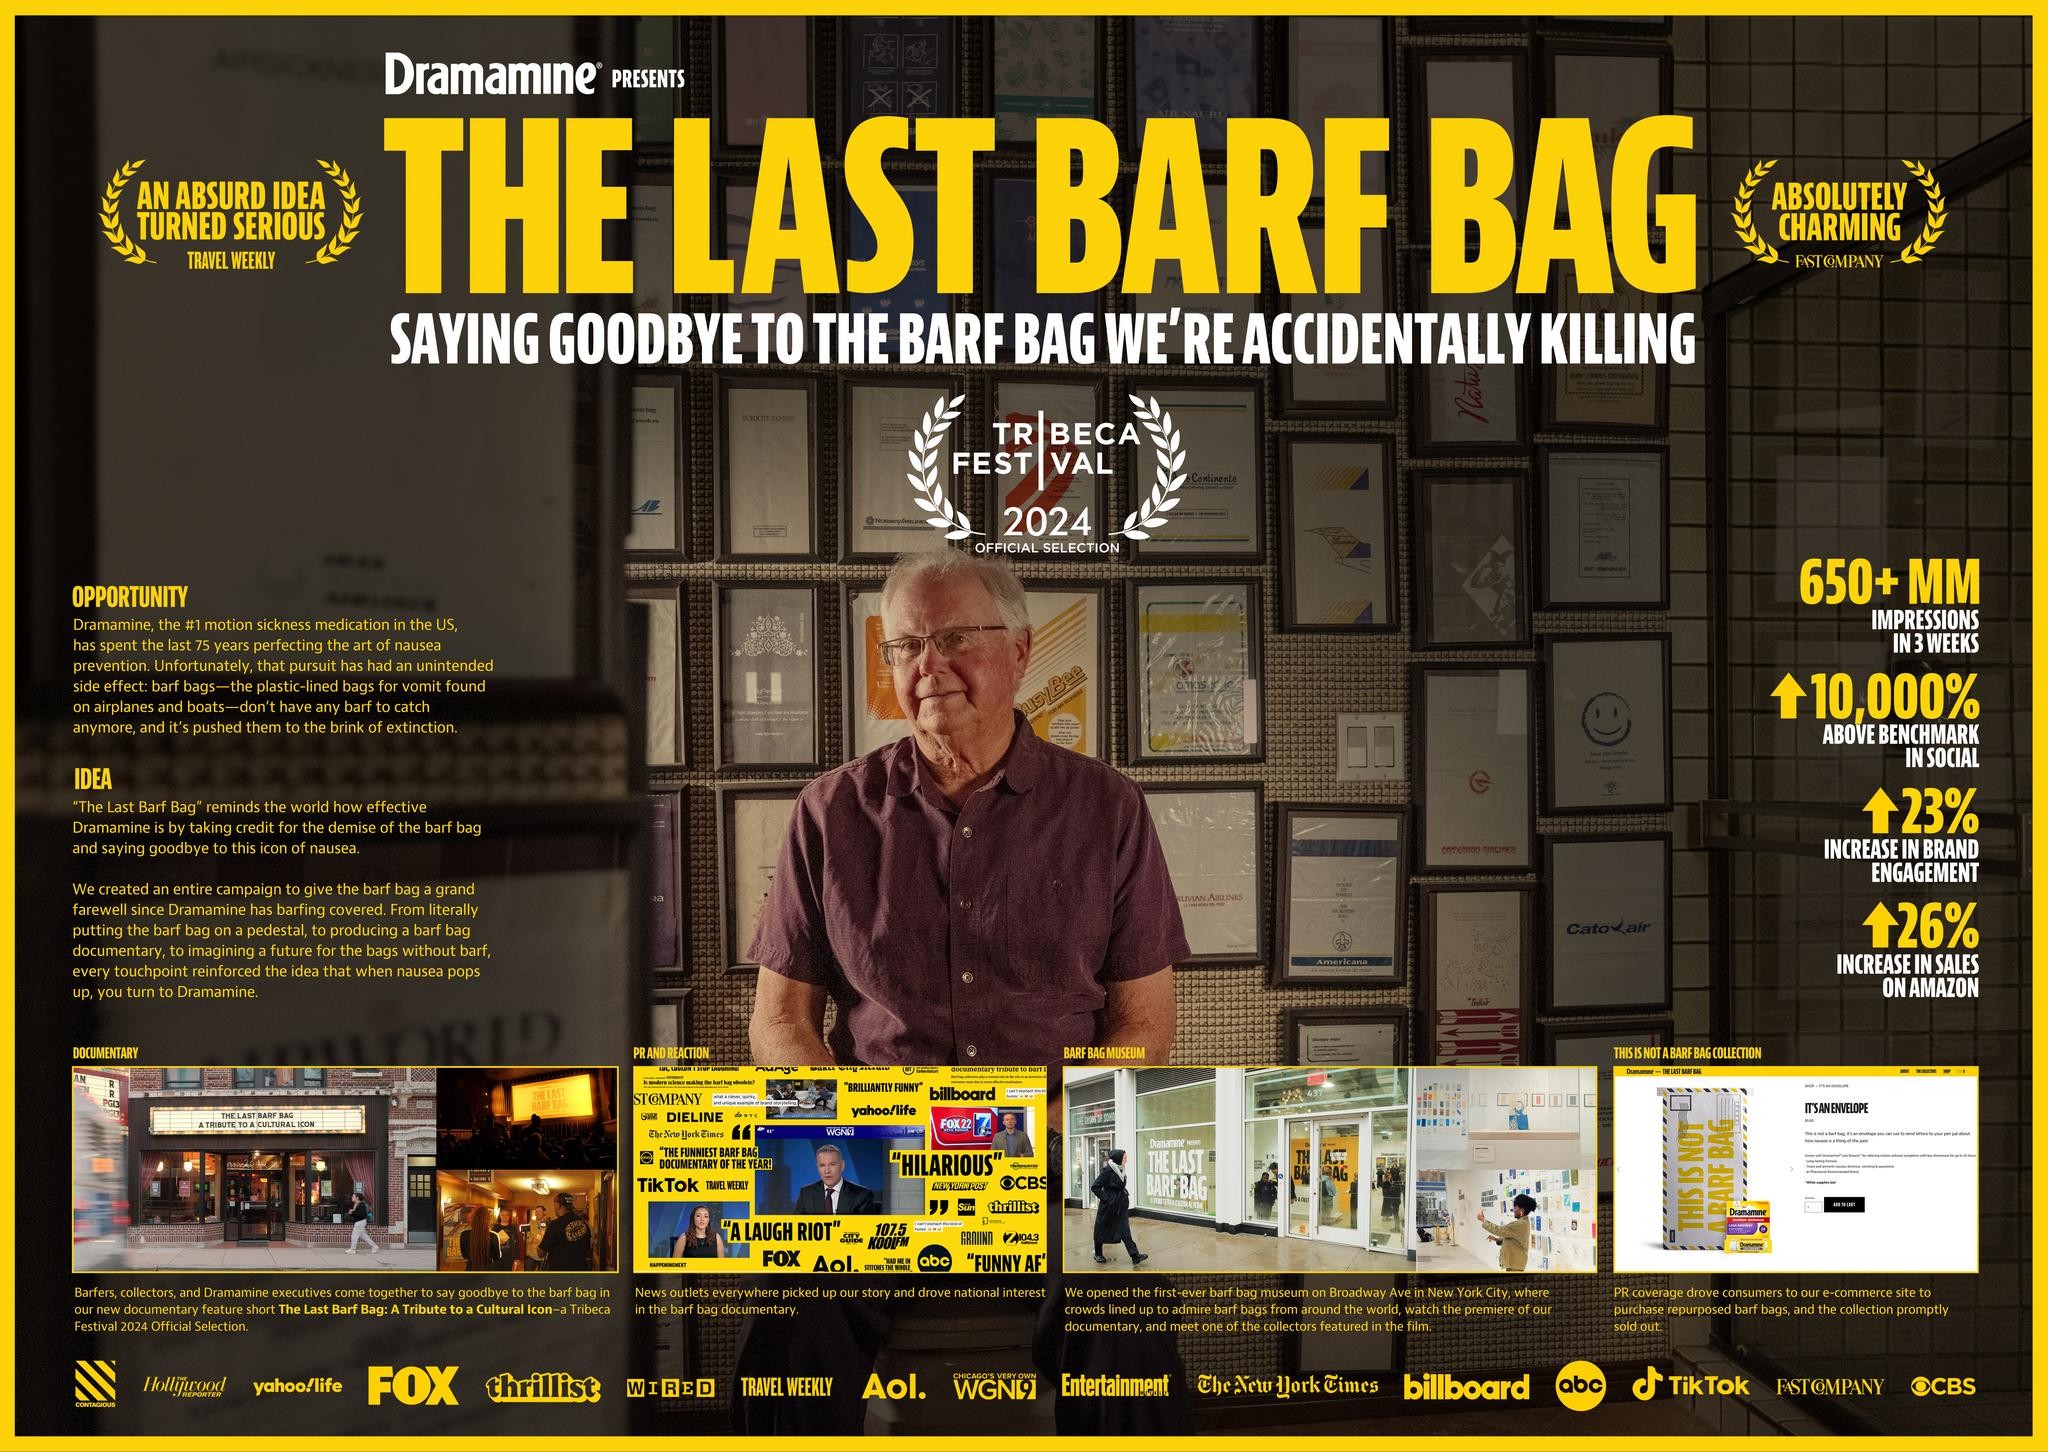 THE LAST BARF BAG